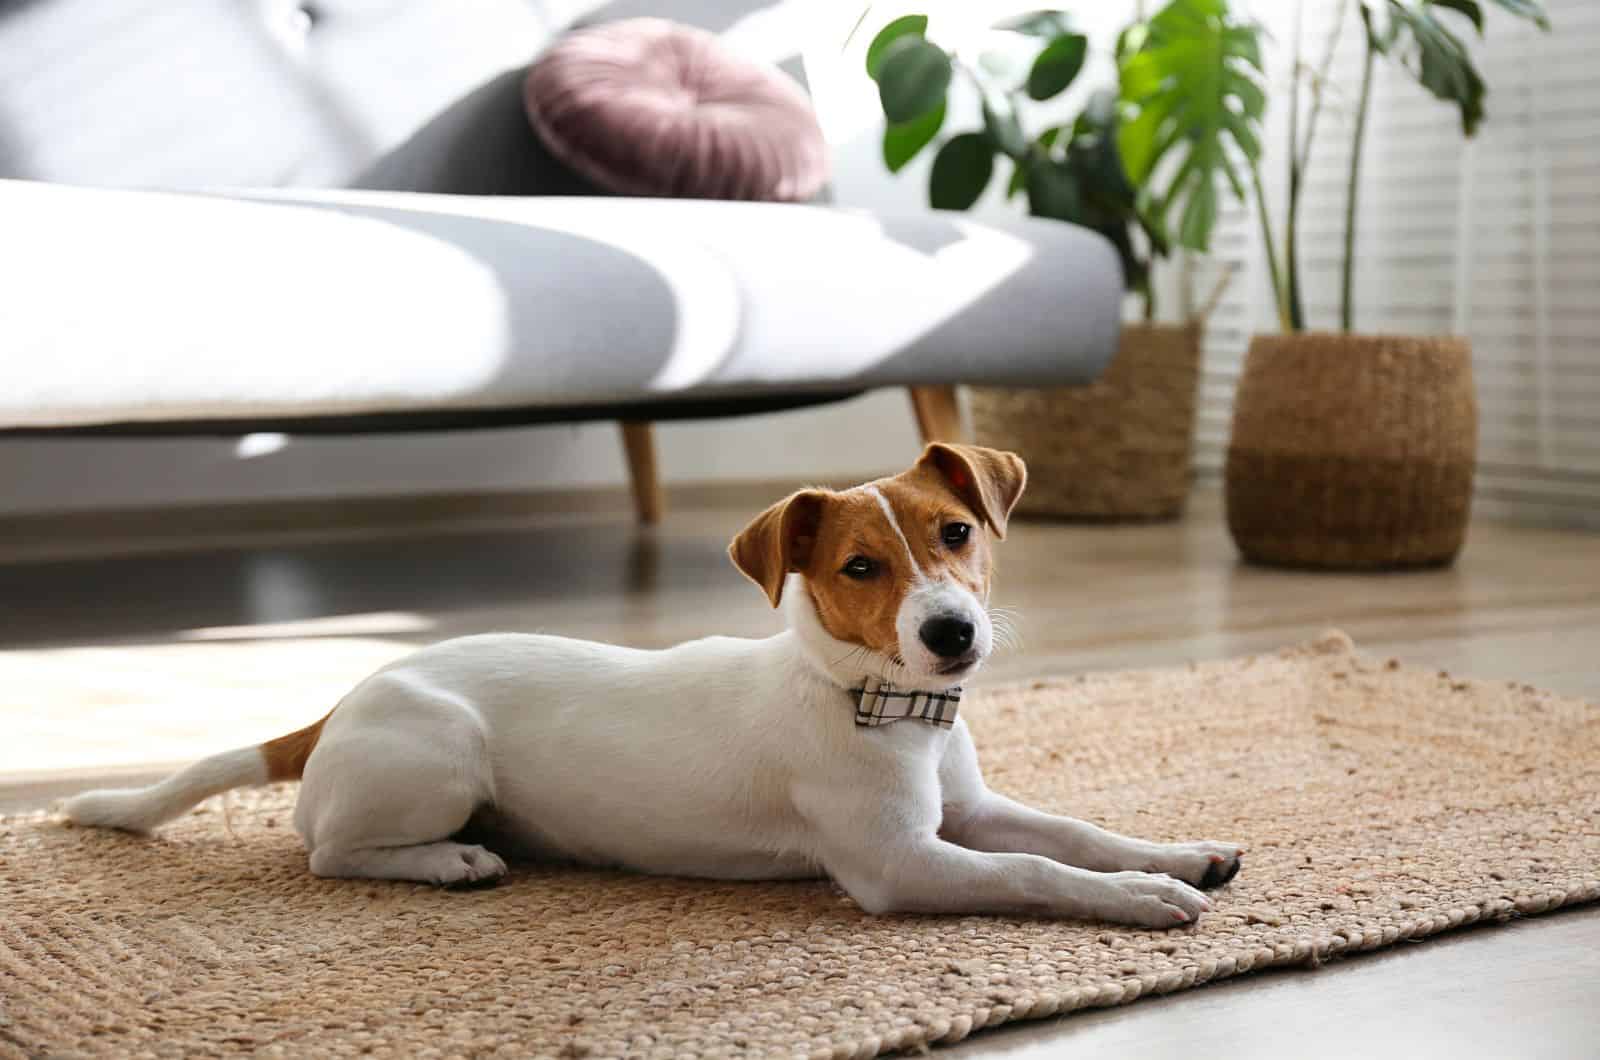 Jack Russell Terrier lying on carpet